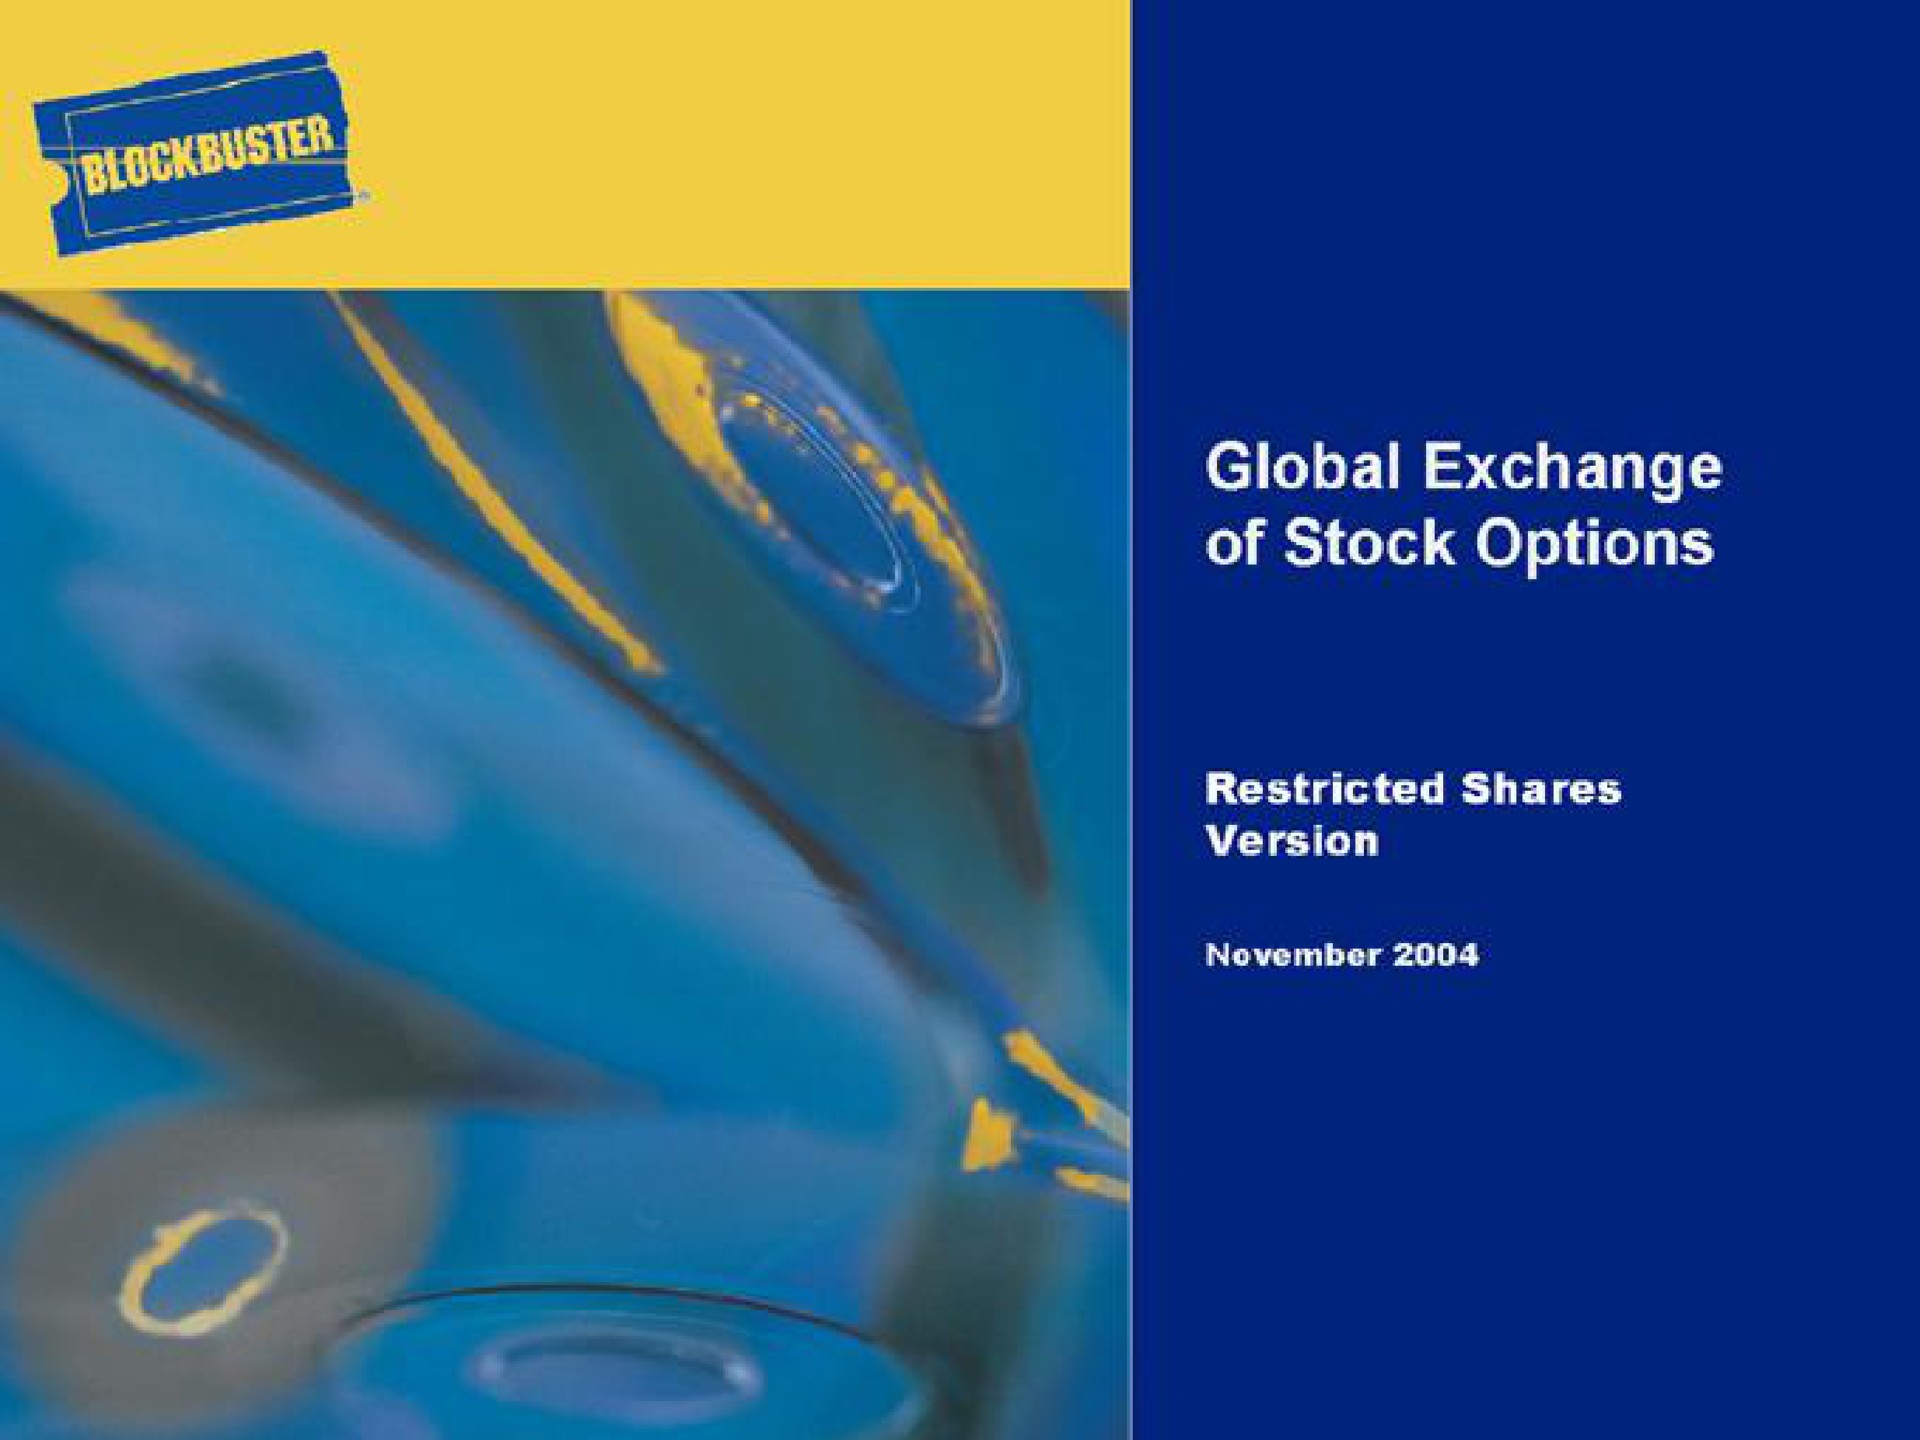 global exchange of stock options | Blockbuster Video